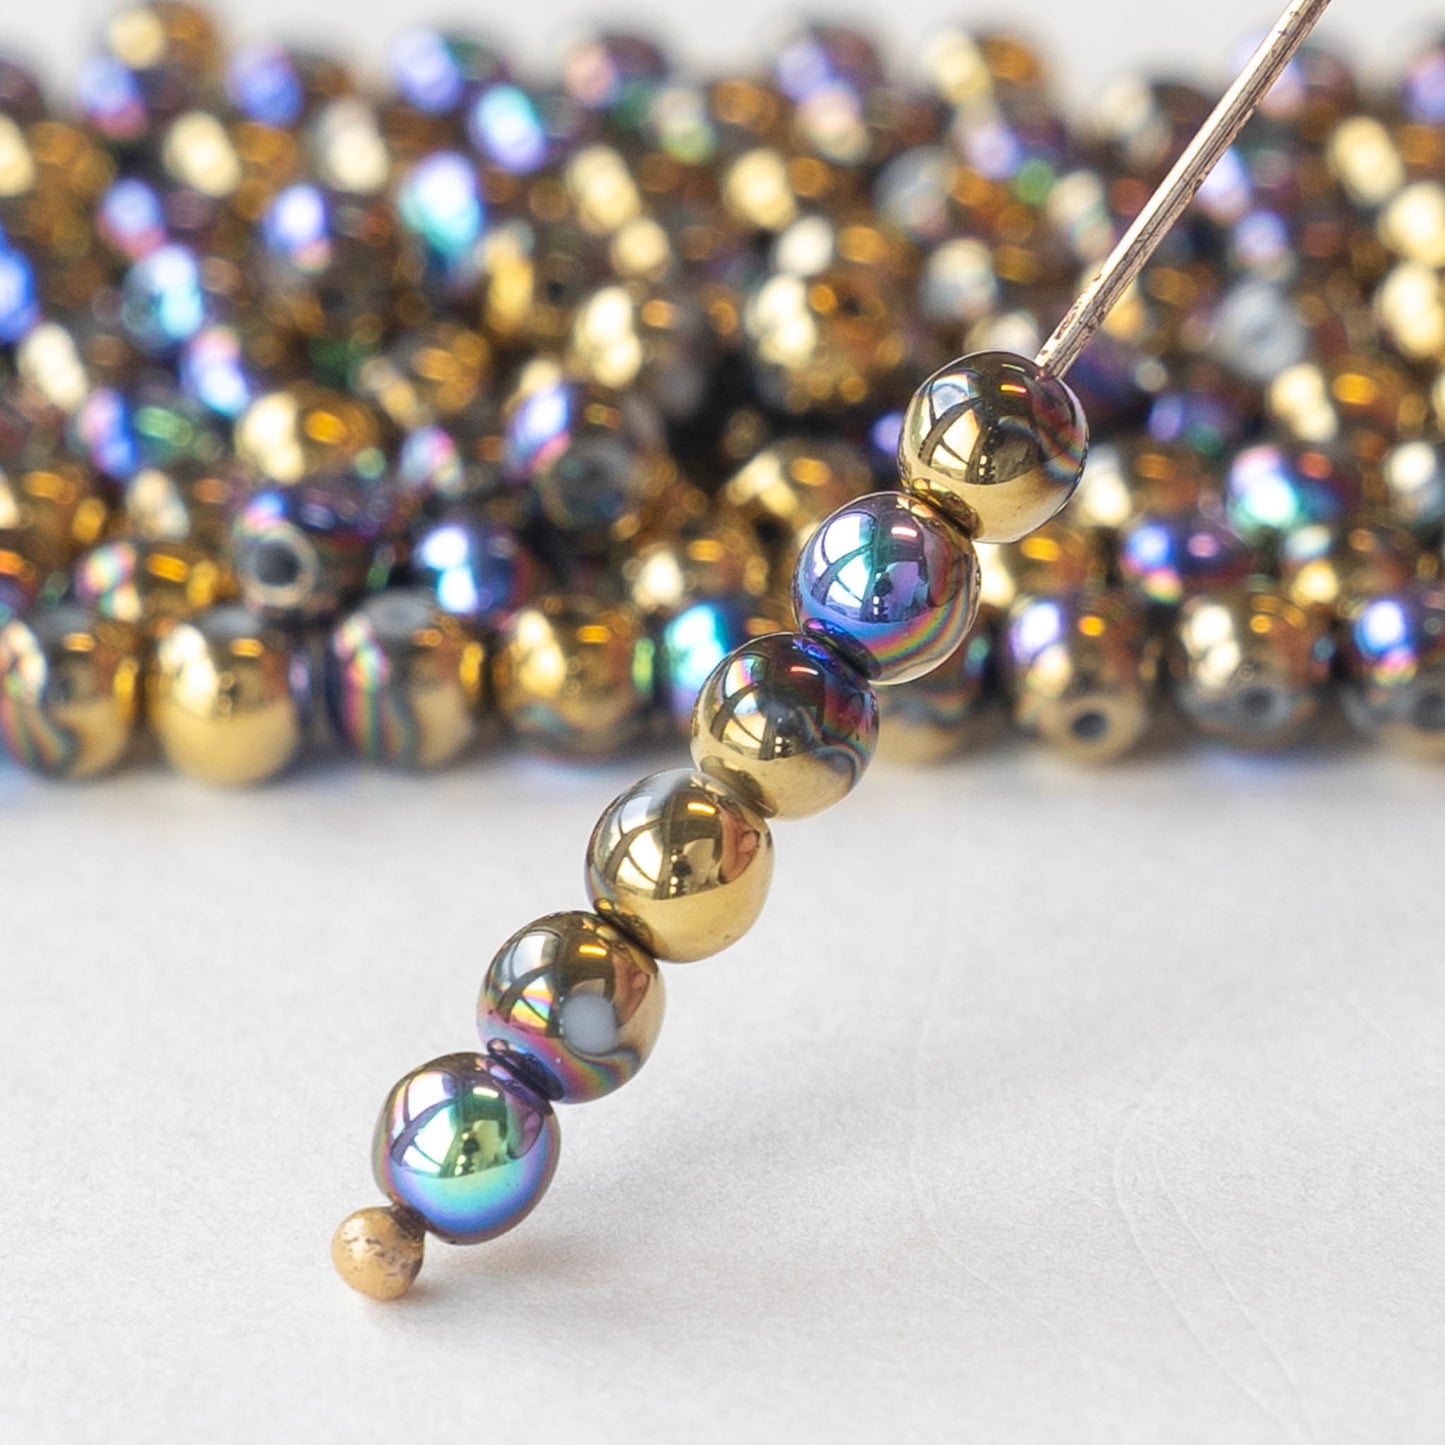 4mm Round Glass Beads - Metallic Blue Gold - 120